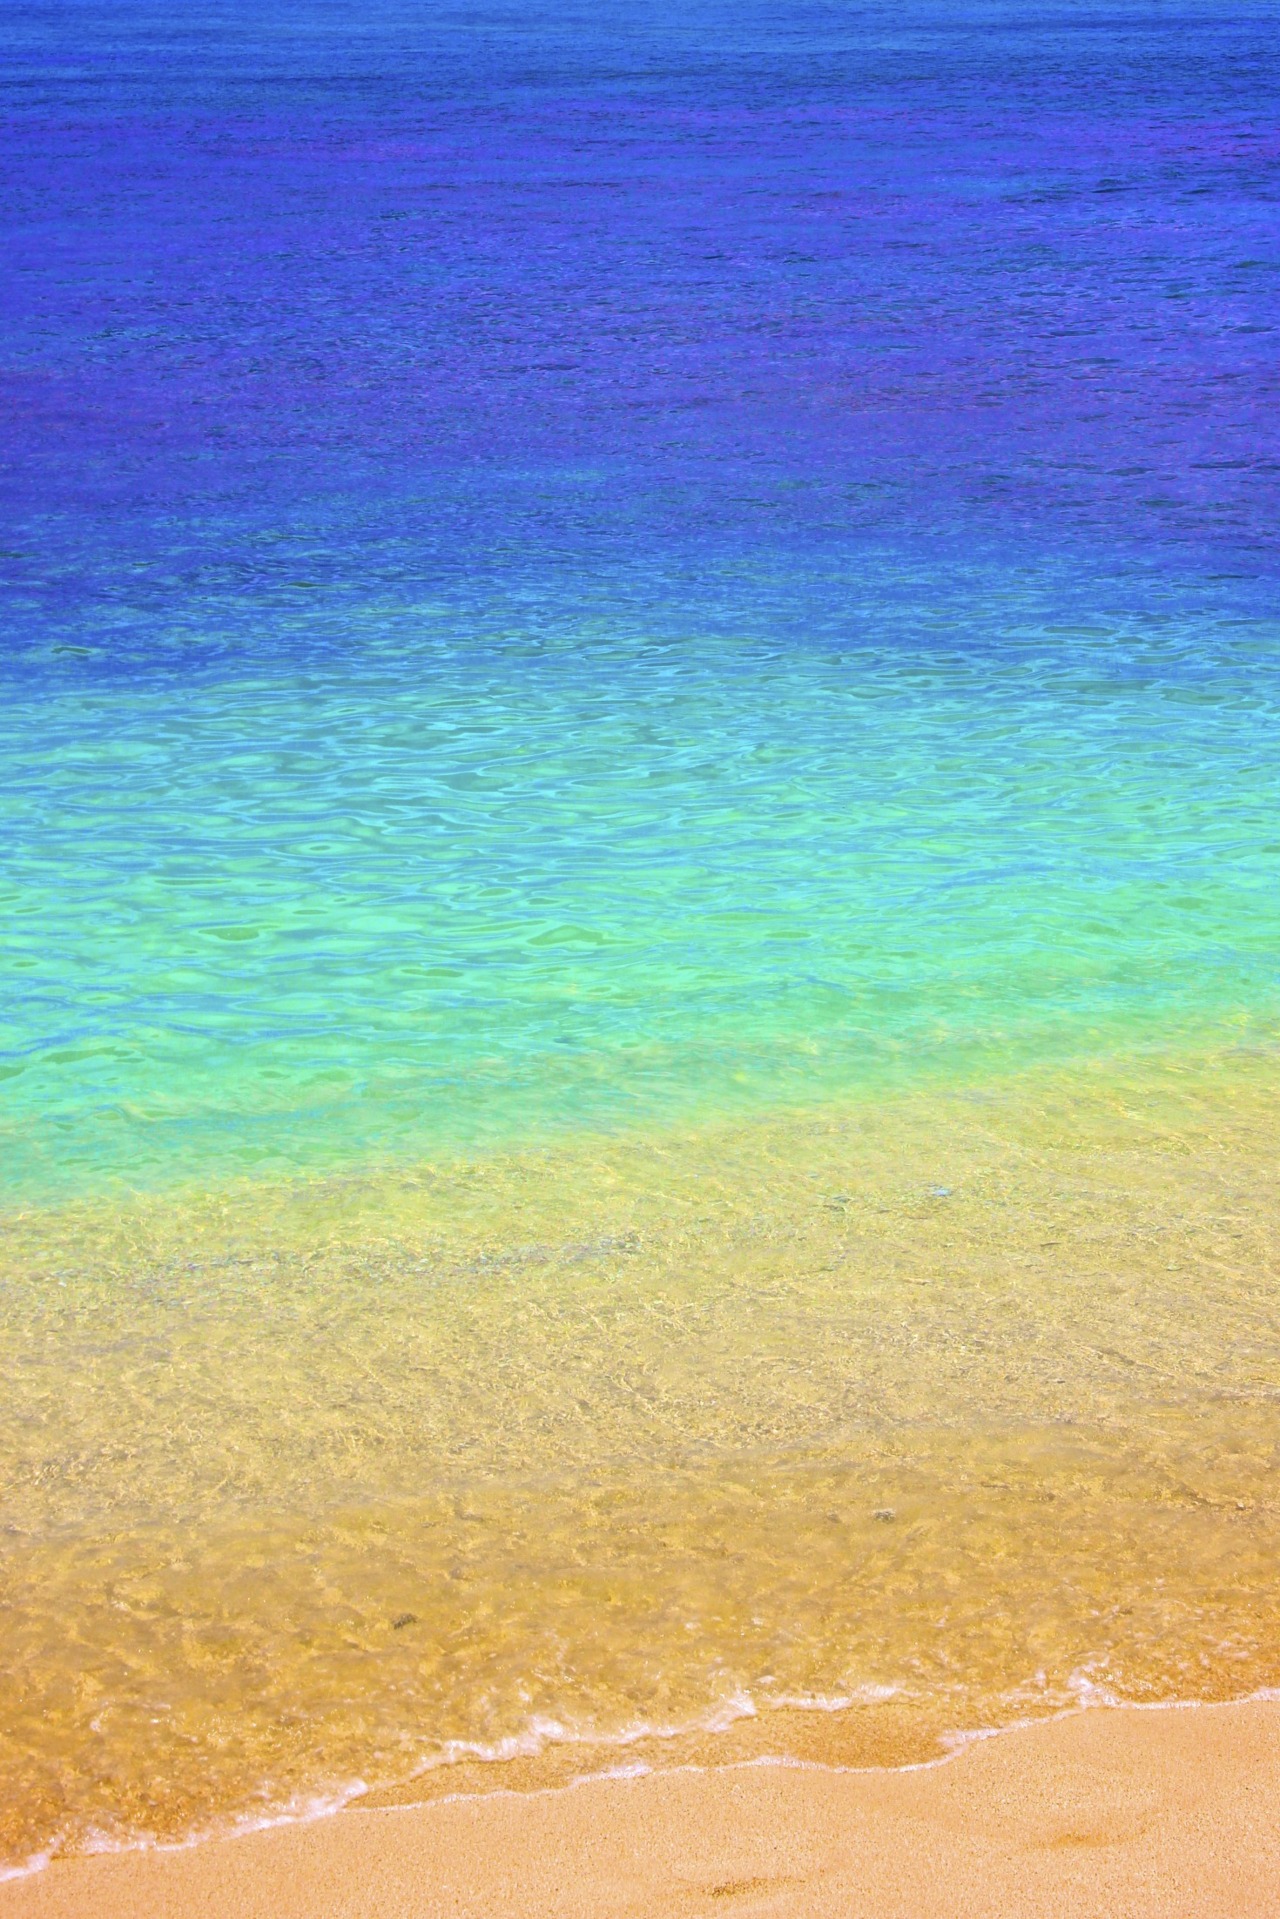 Wallpaper Ocean Theme Jessica Alba HD iPhone